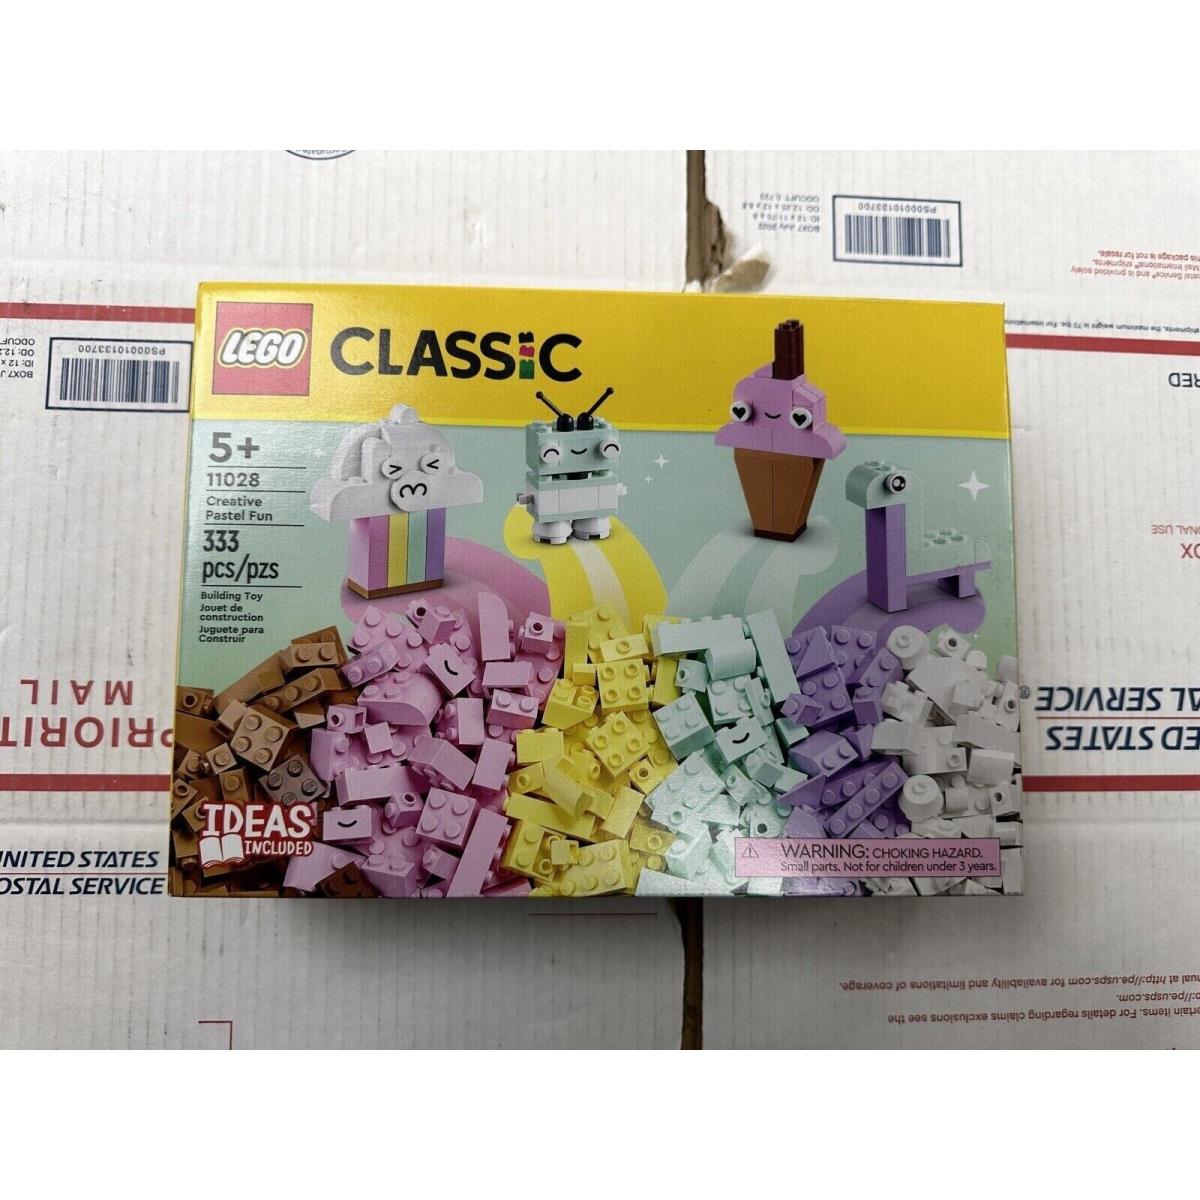 Lego Classic: Creative Pastel Fun 11028 Building Set